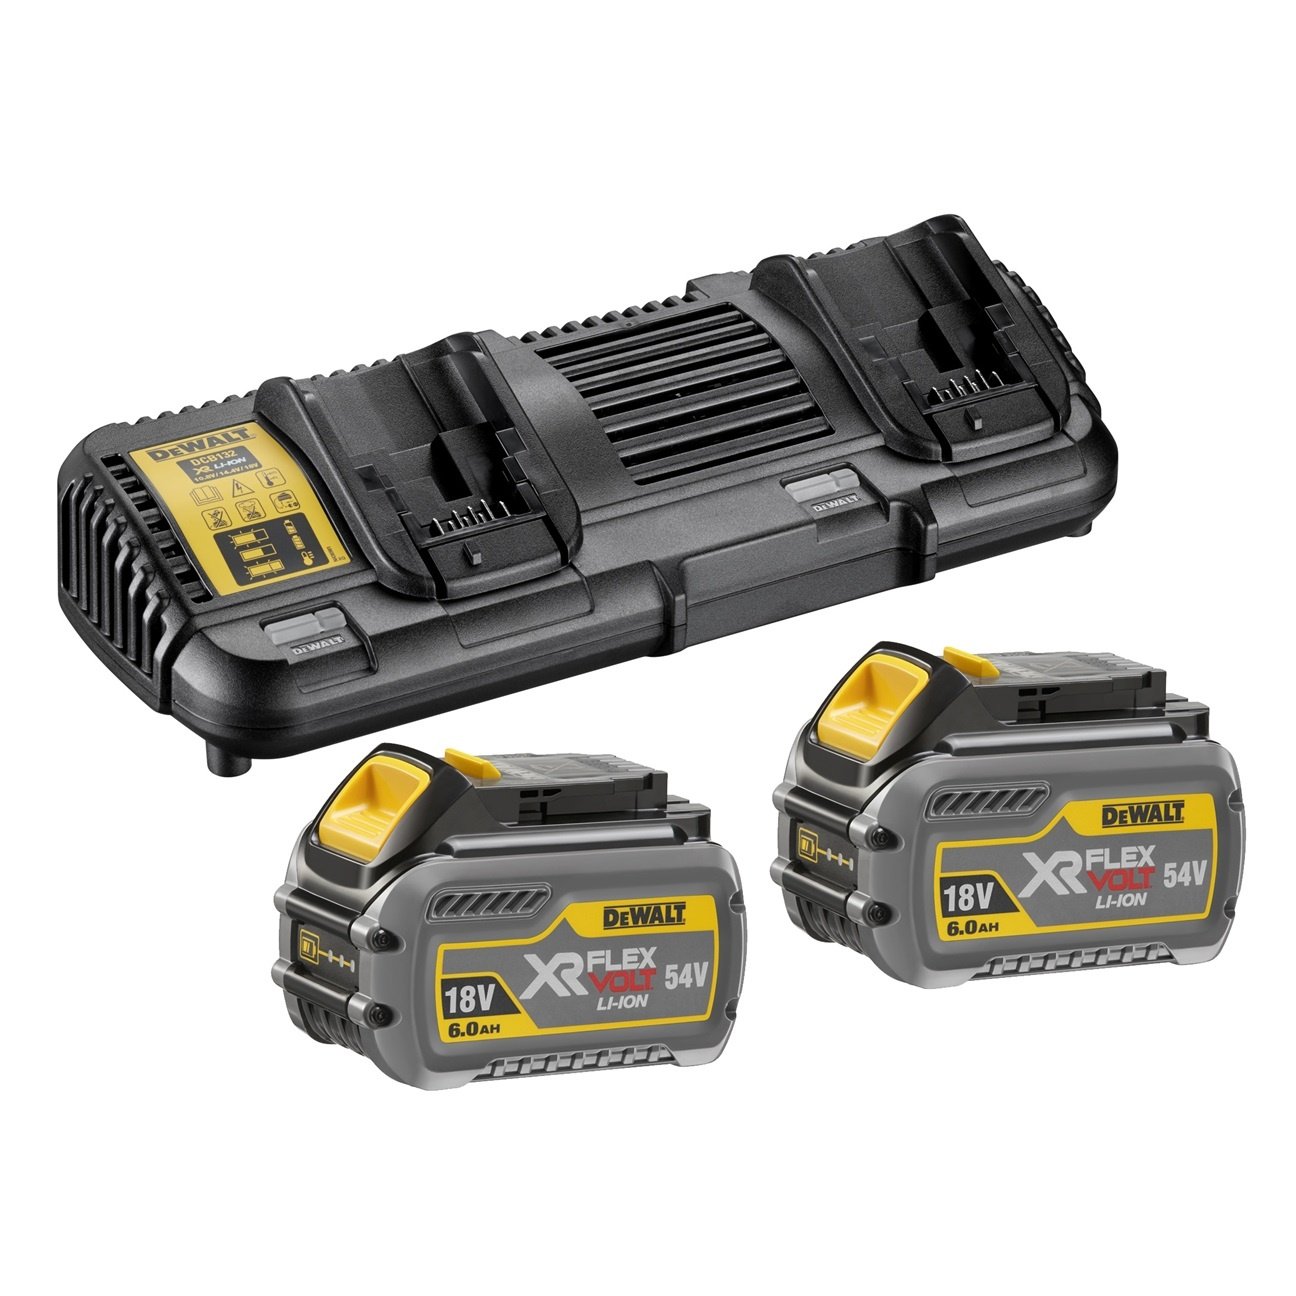 Dewalt 54v FlexVolt Battery Charger Kit 6.0ah DCB132T2 Power Tool Services